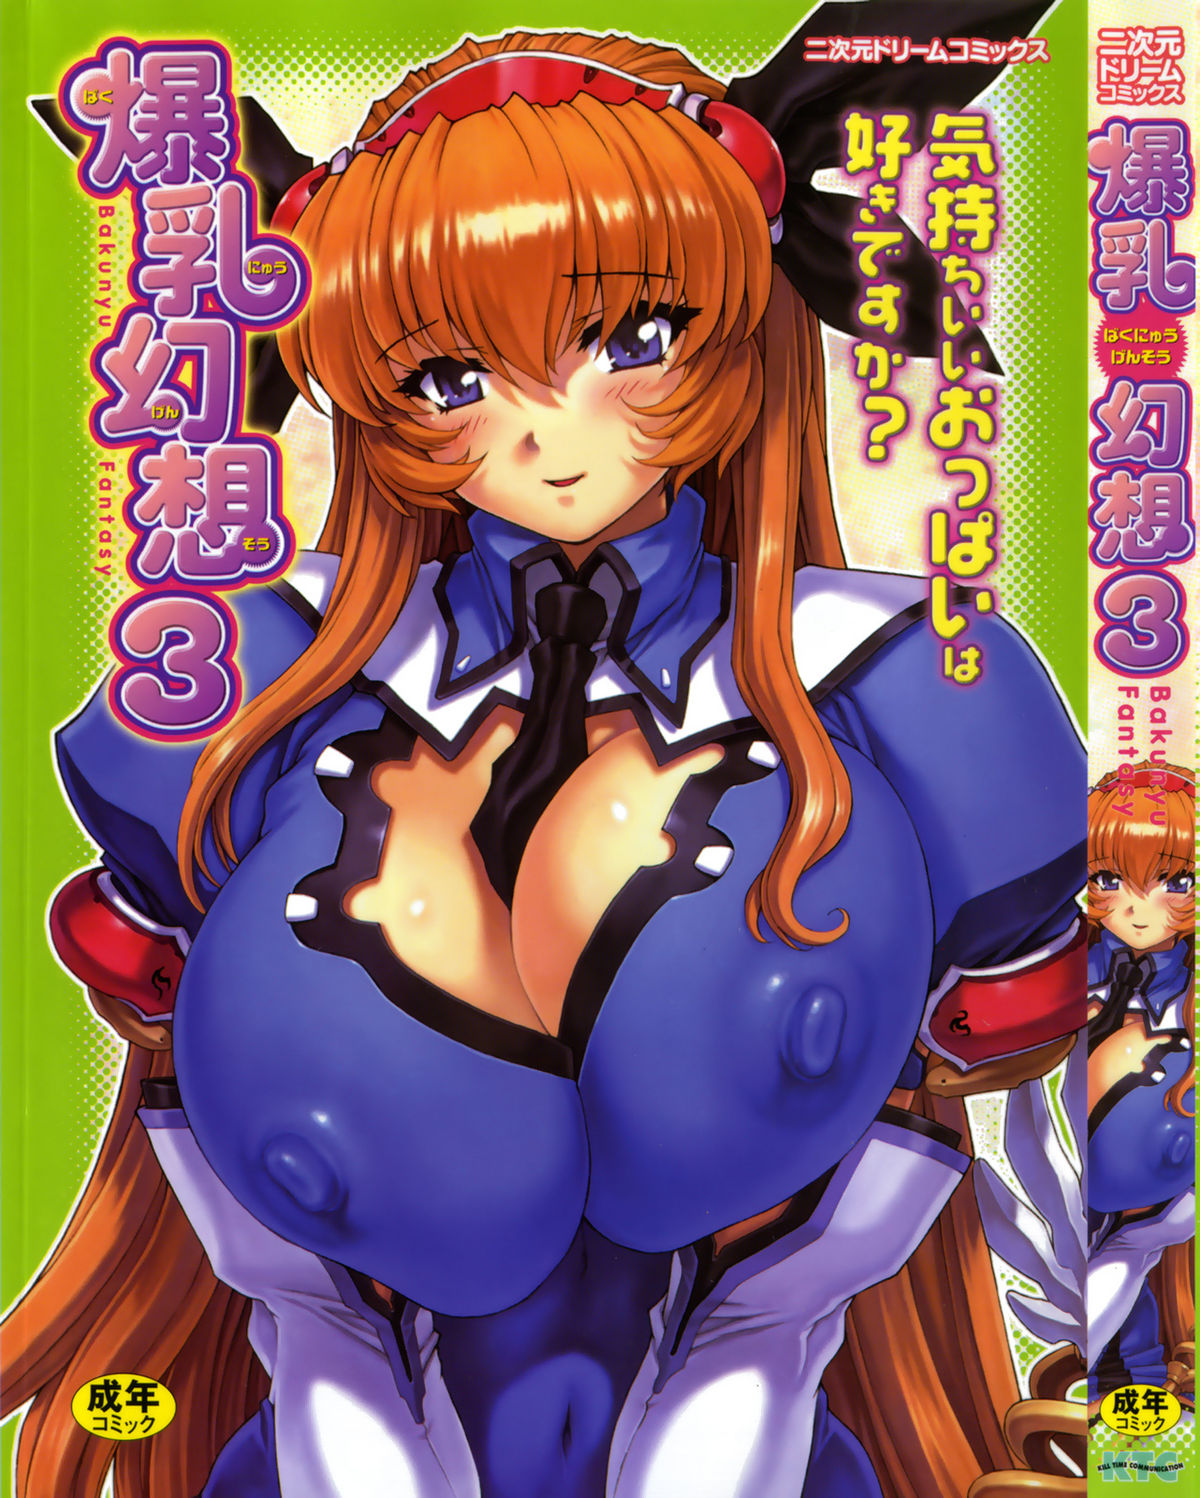 Z-s-e Porn Comics Â» Hentai Porns - Manga And Porncomics Xxx Hentai Comics